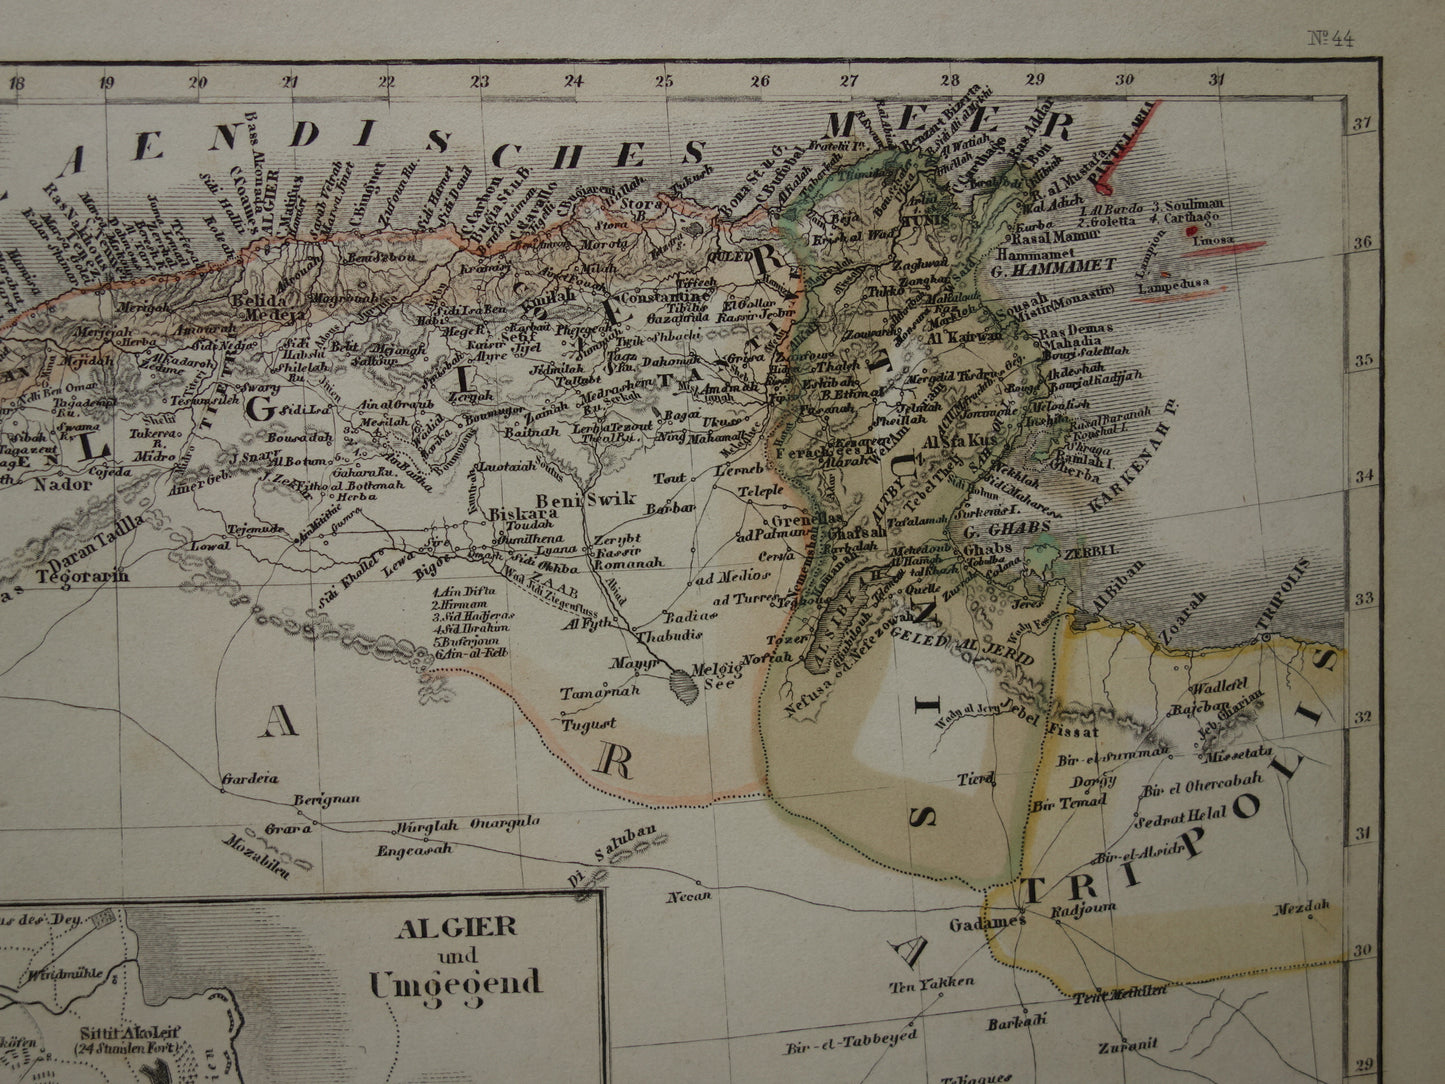 MAROKKO oude kaart van Marokko Algerije en Tunesië 1849 originele antieke landkaart Algiers Constantine en Marakesh plattegrond